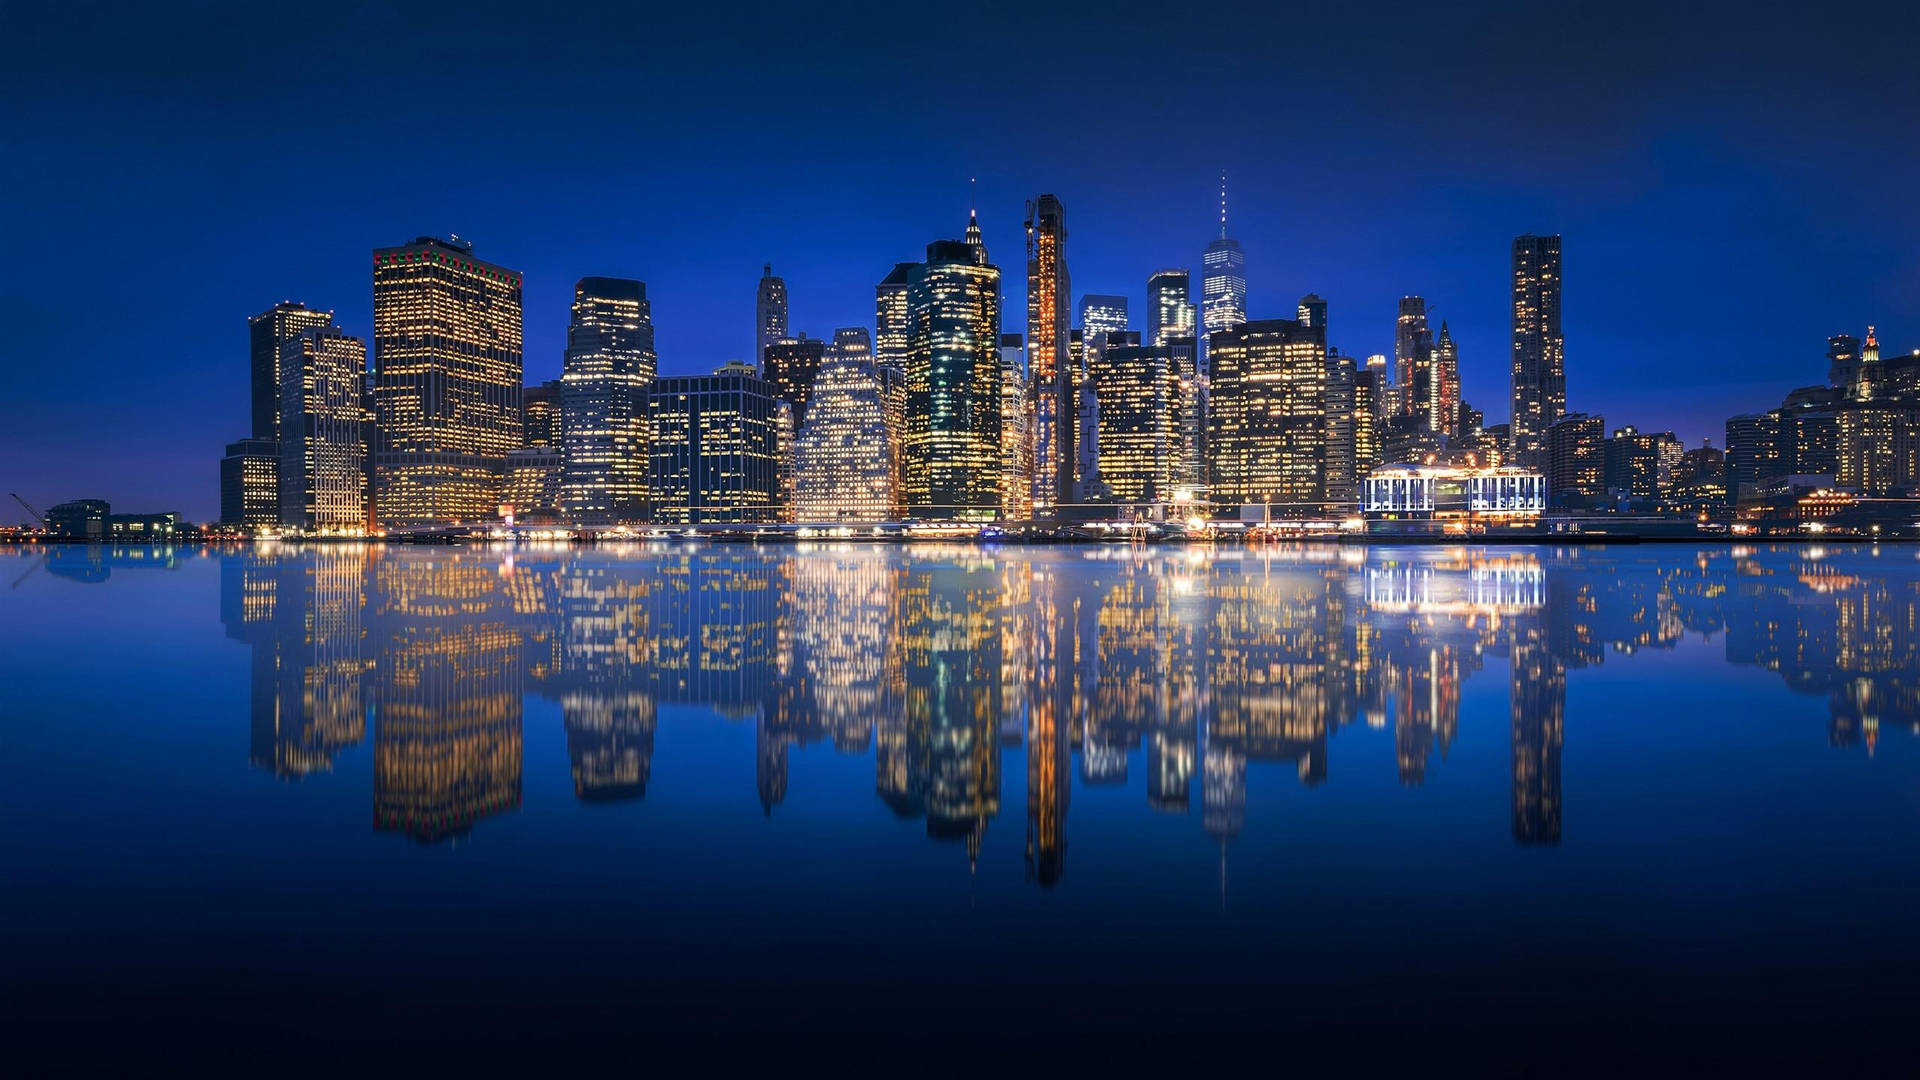 City Building Reflection New York Night Iphone Wallpaper